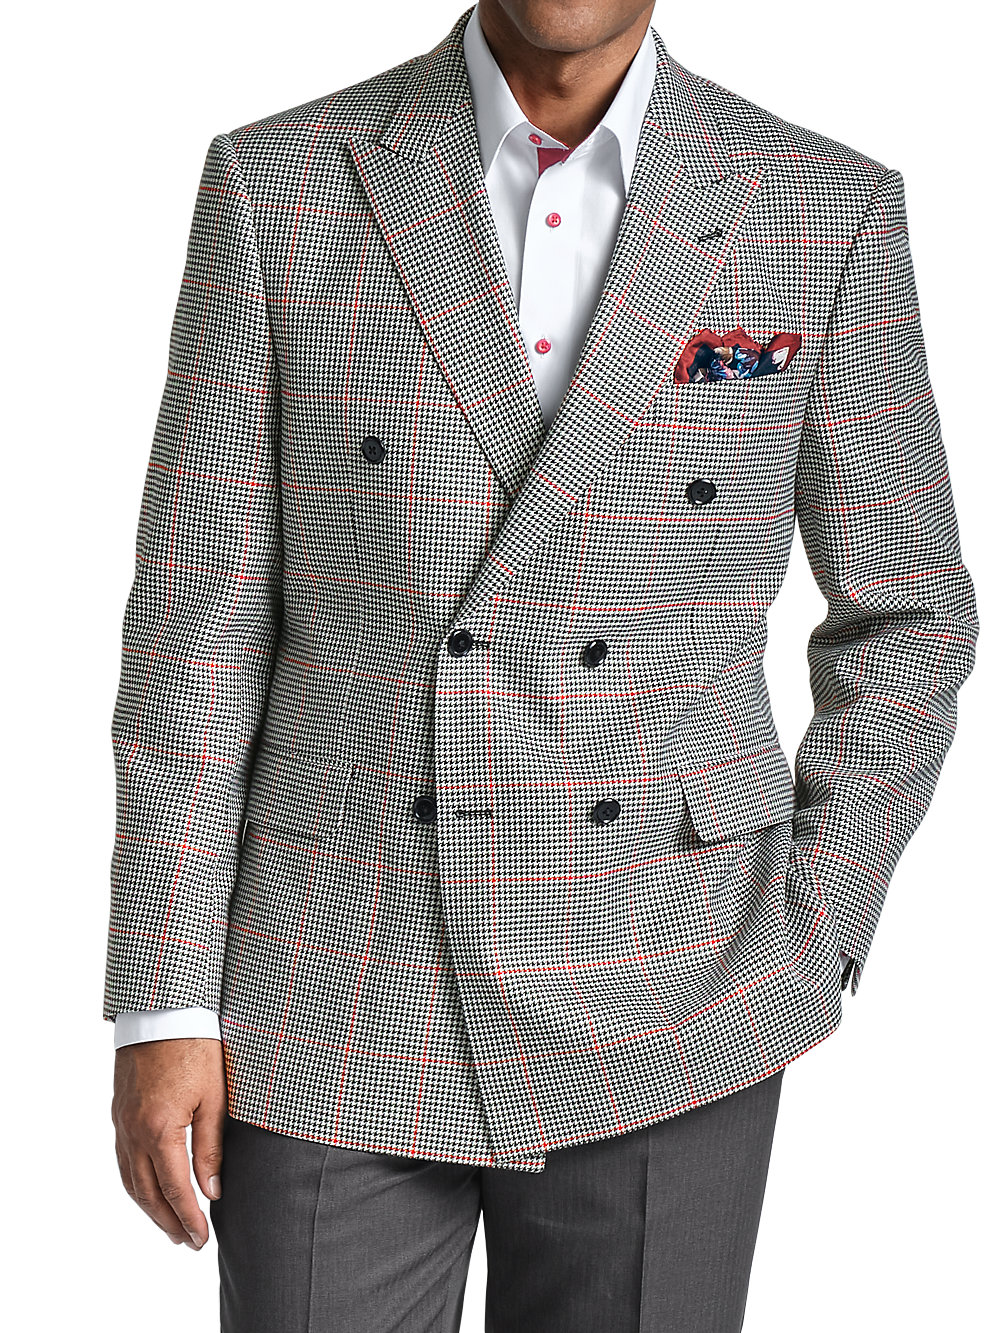 Paul Fredrick Mens Tailored Fit Wool Houndstooth Peak Lapel Suit Jacket